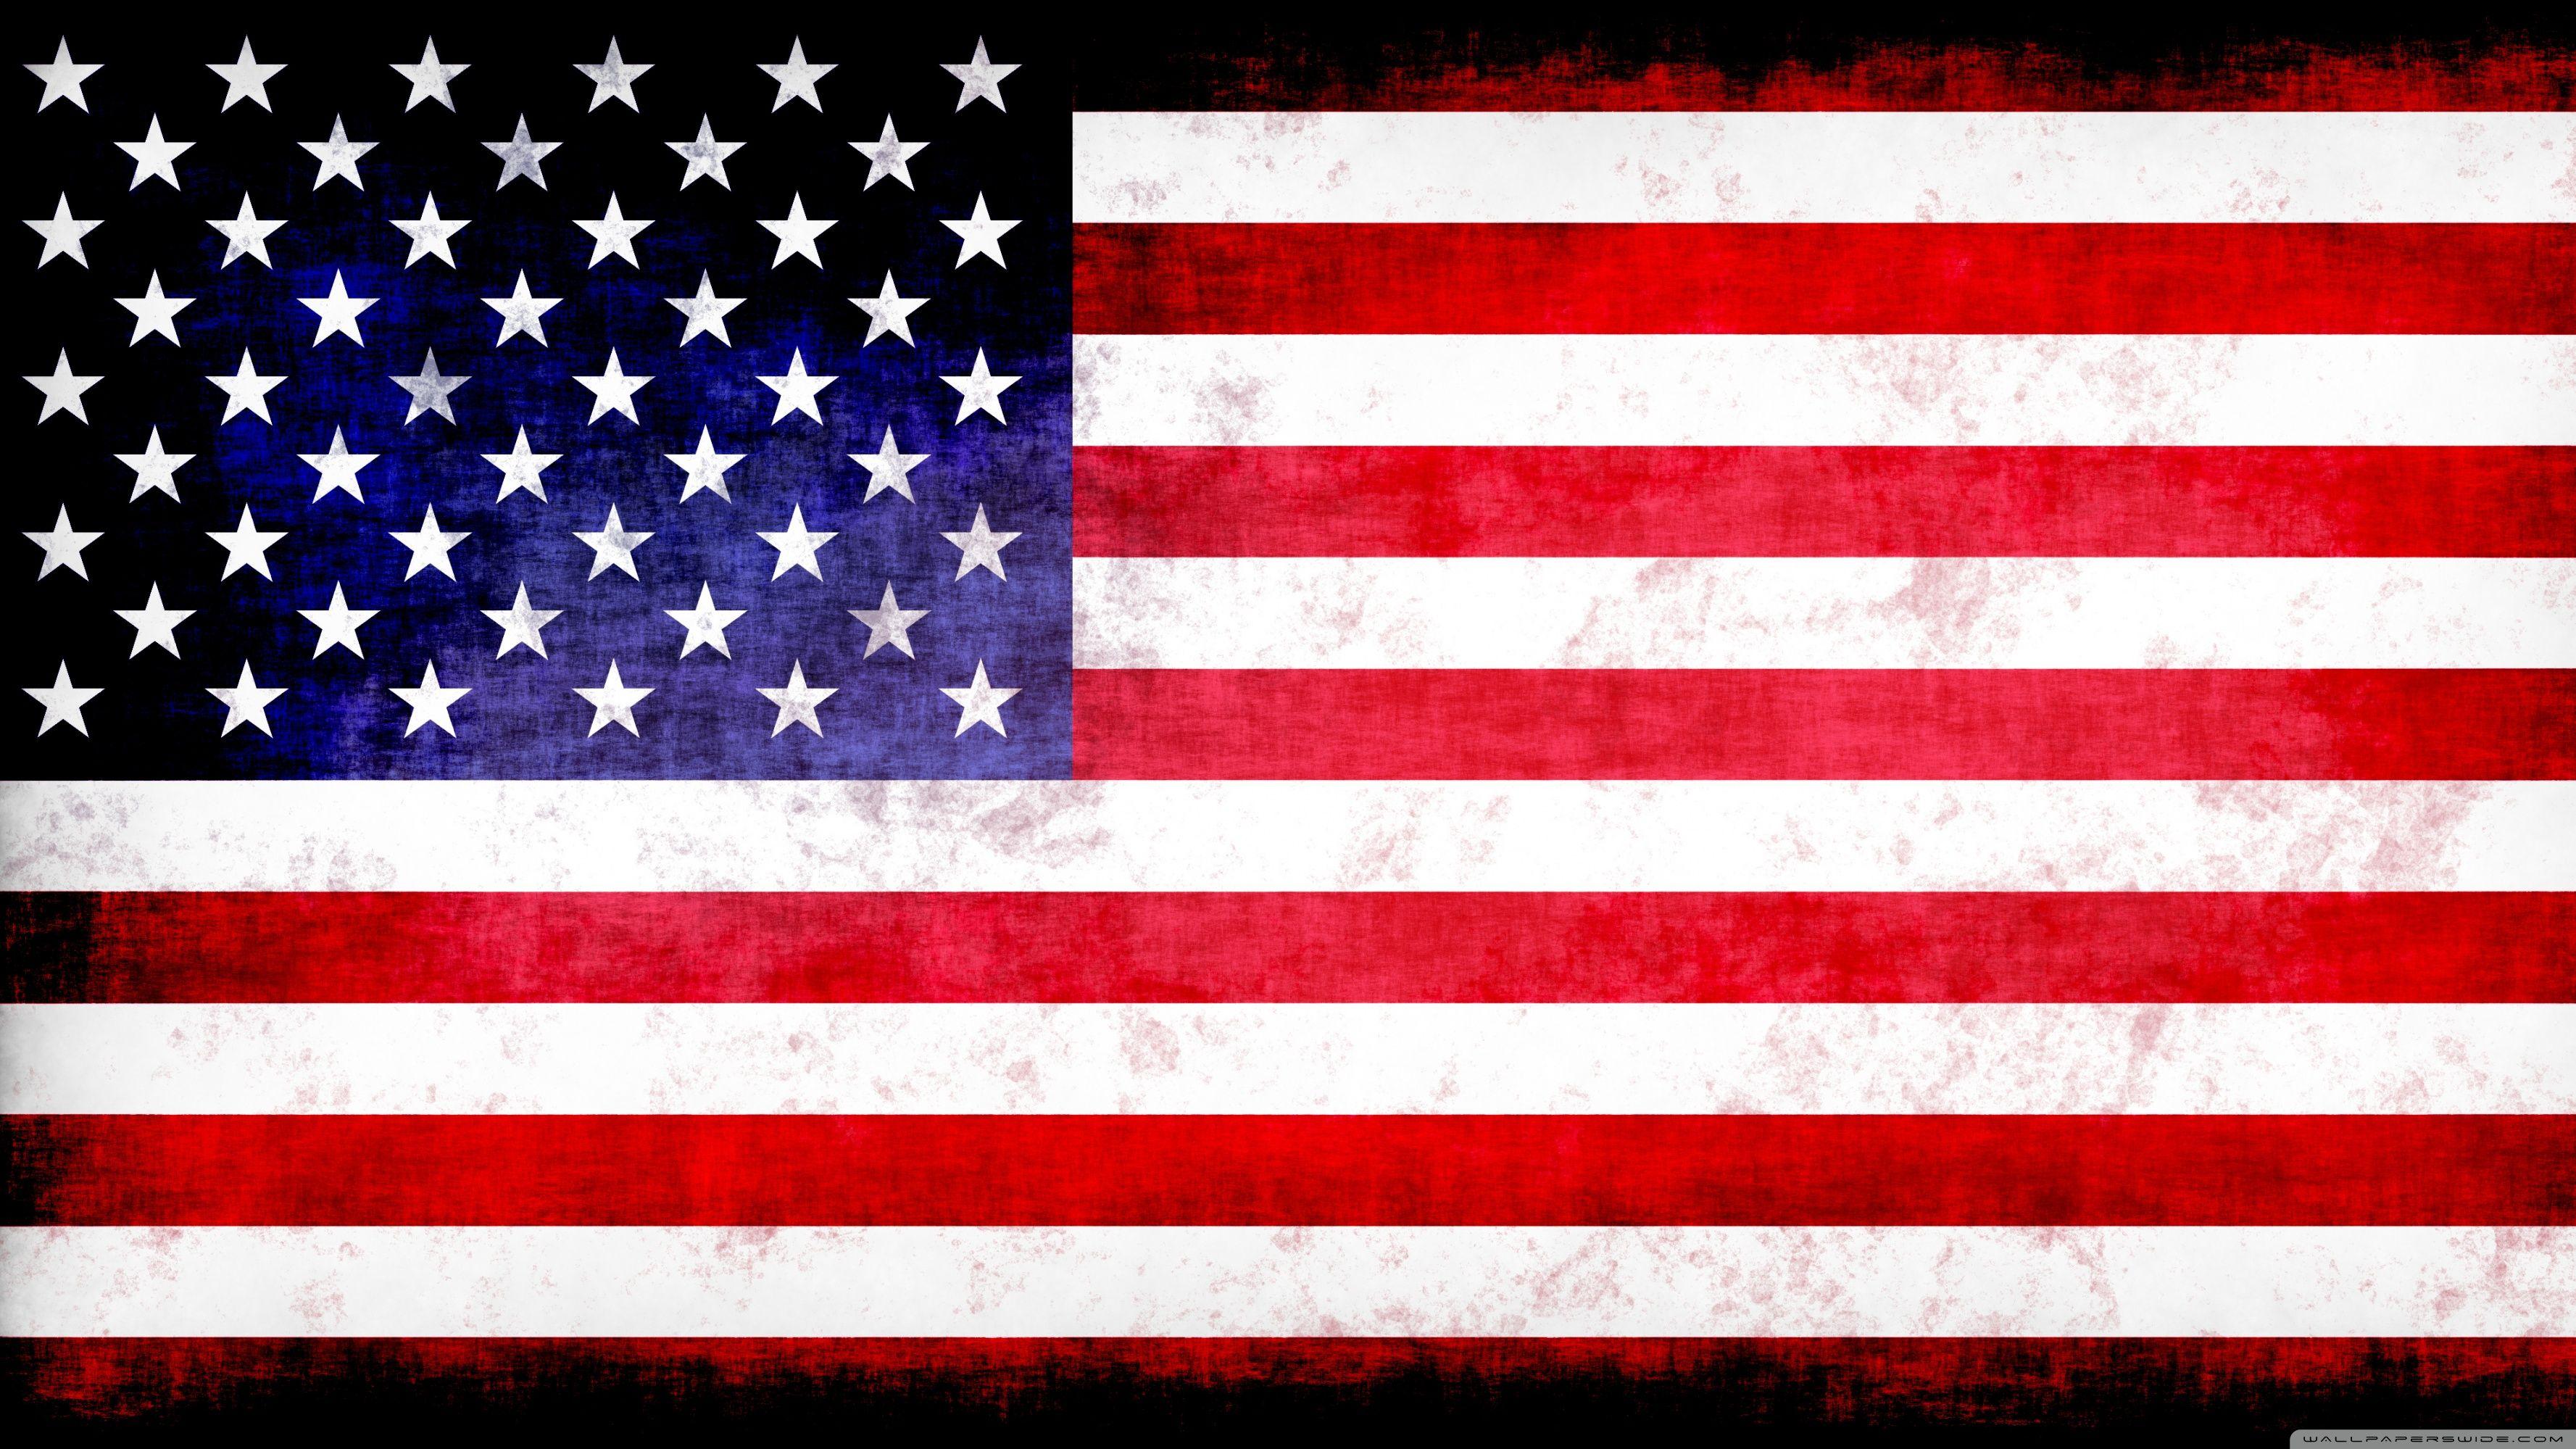 American flag ebony foot images